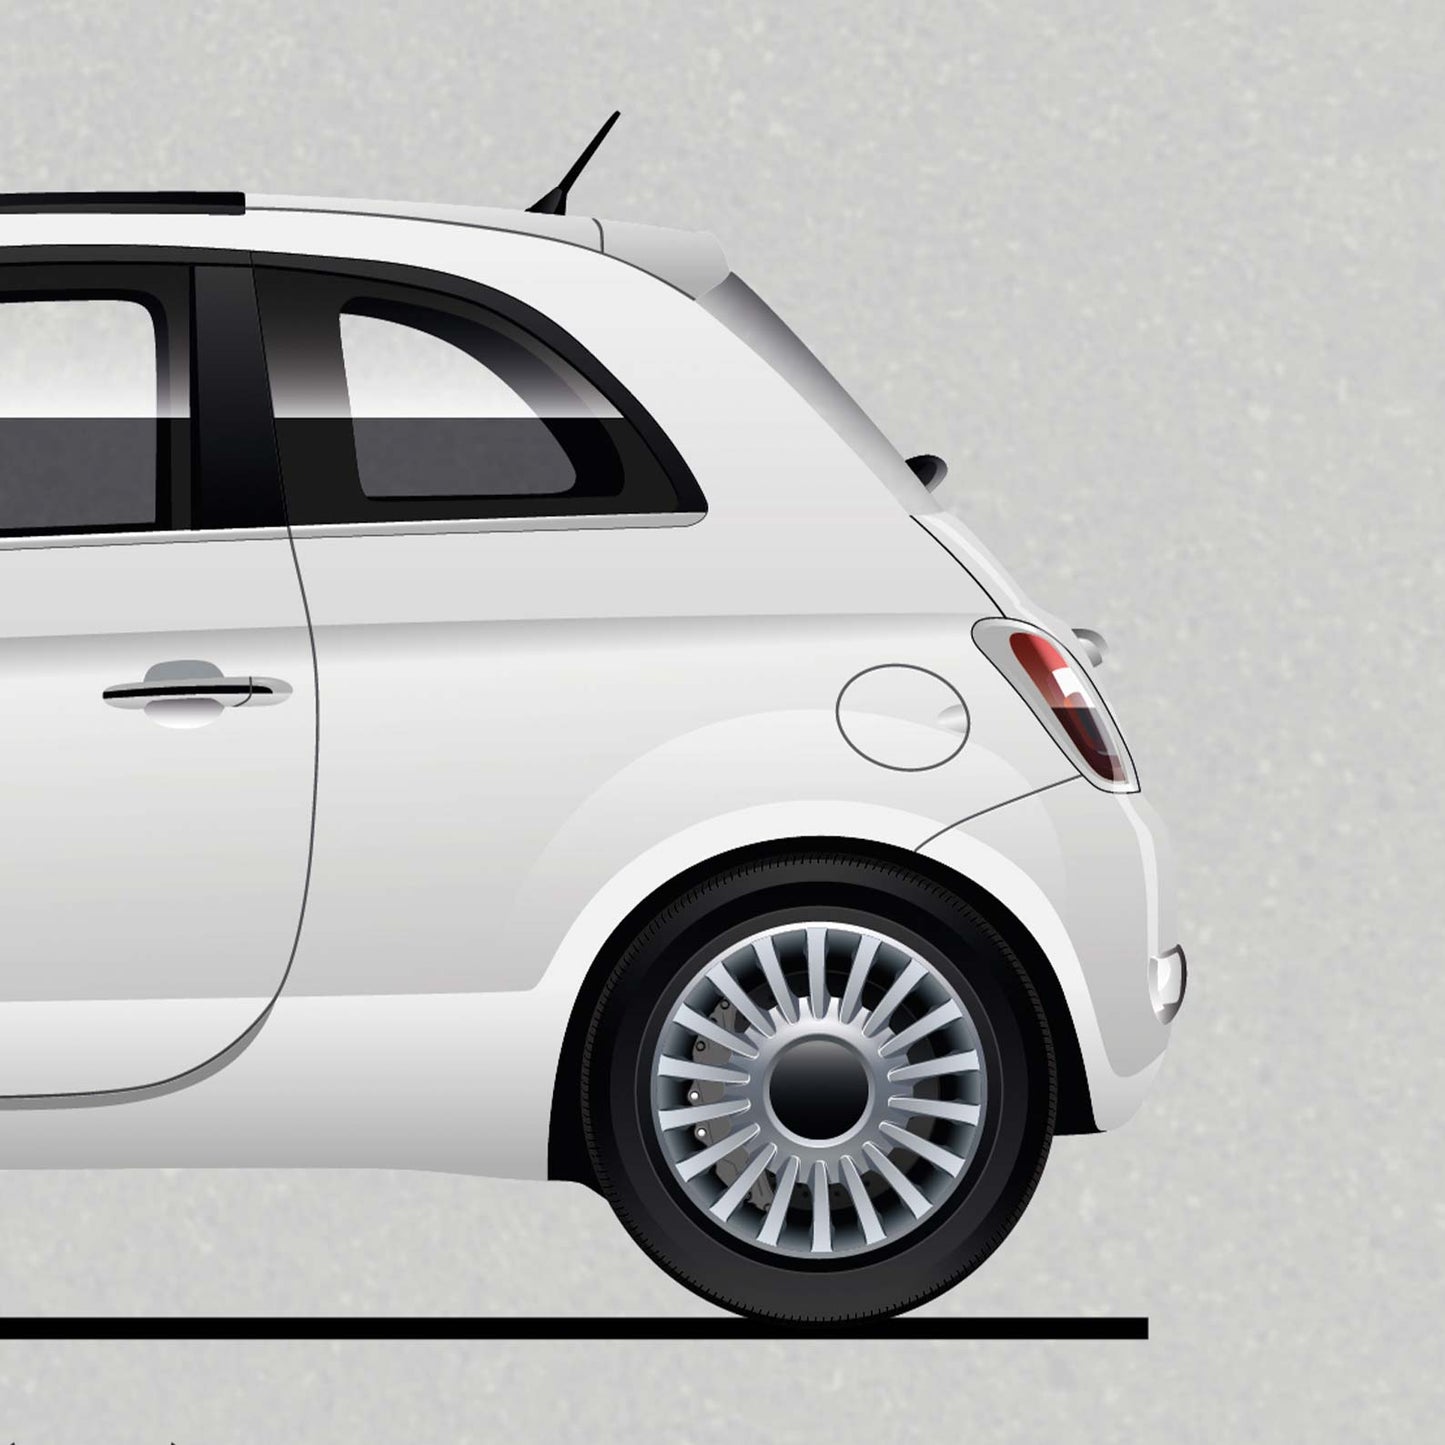 Fiat 500 Evolution Poster (Unframed)